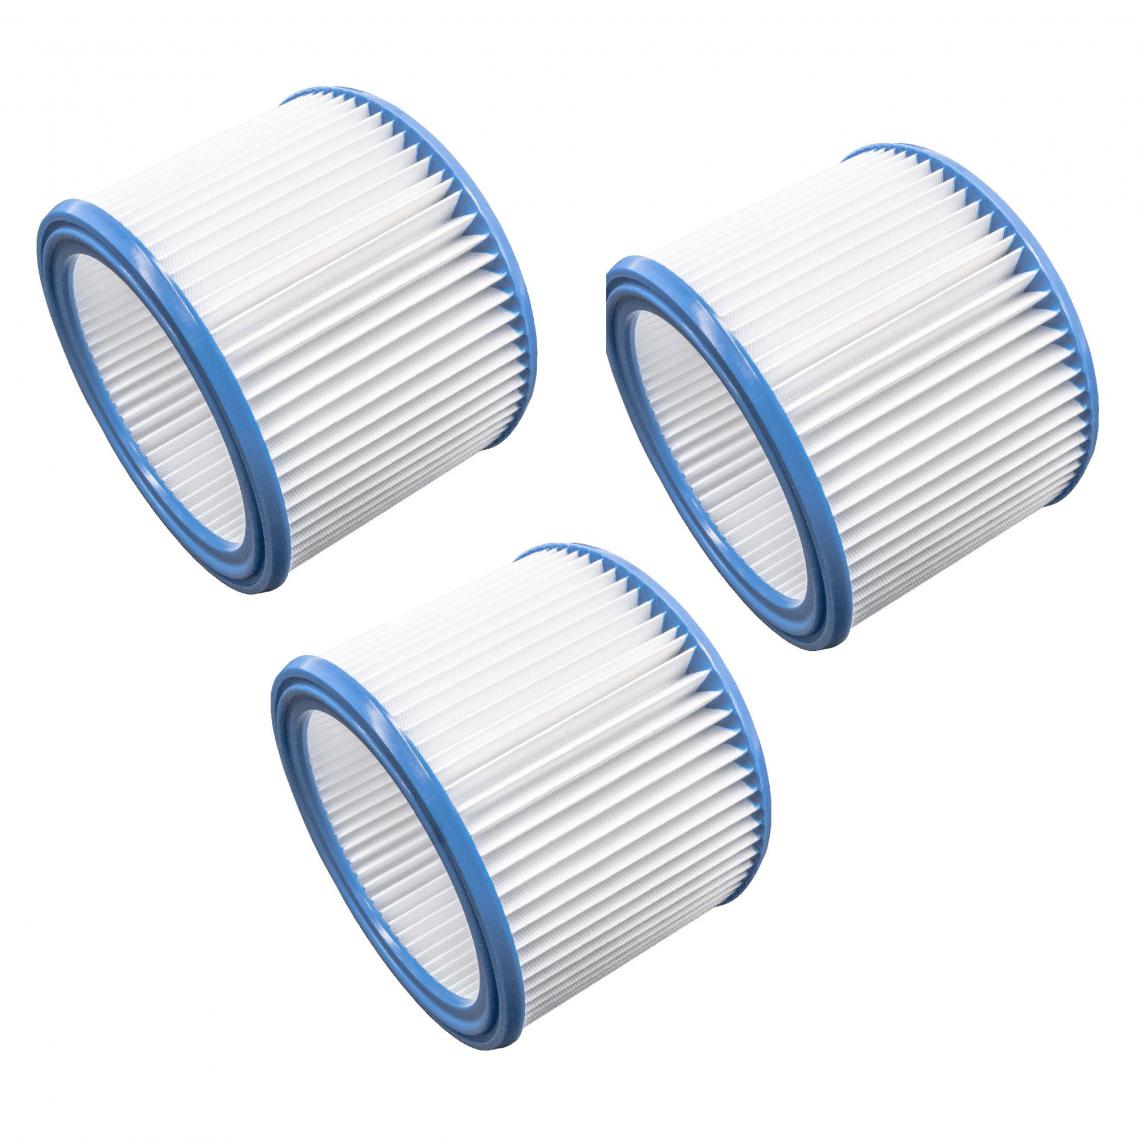 Vhbw - vhbw Set de filtres 3x Filtre plissé compatible avec Makita 441, 442, 446L, 446 LX, P-70219, VC2010L aspirateur à sec ou humide - Filtre à cartouche - Accessoire entretien des sols